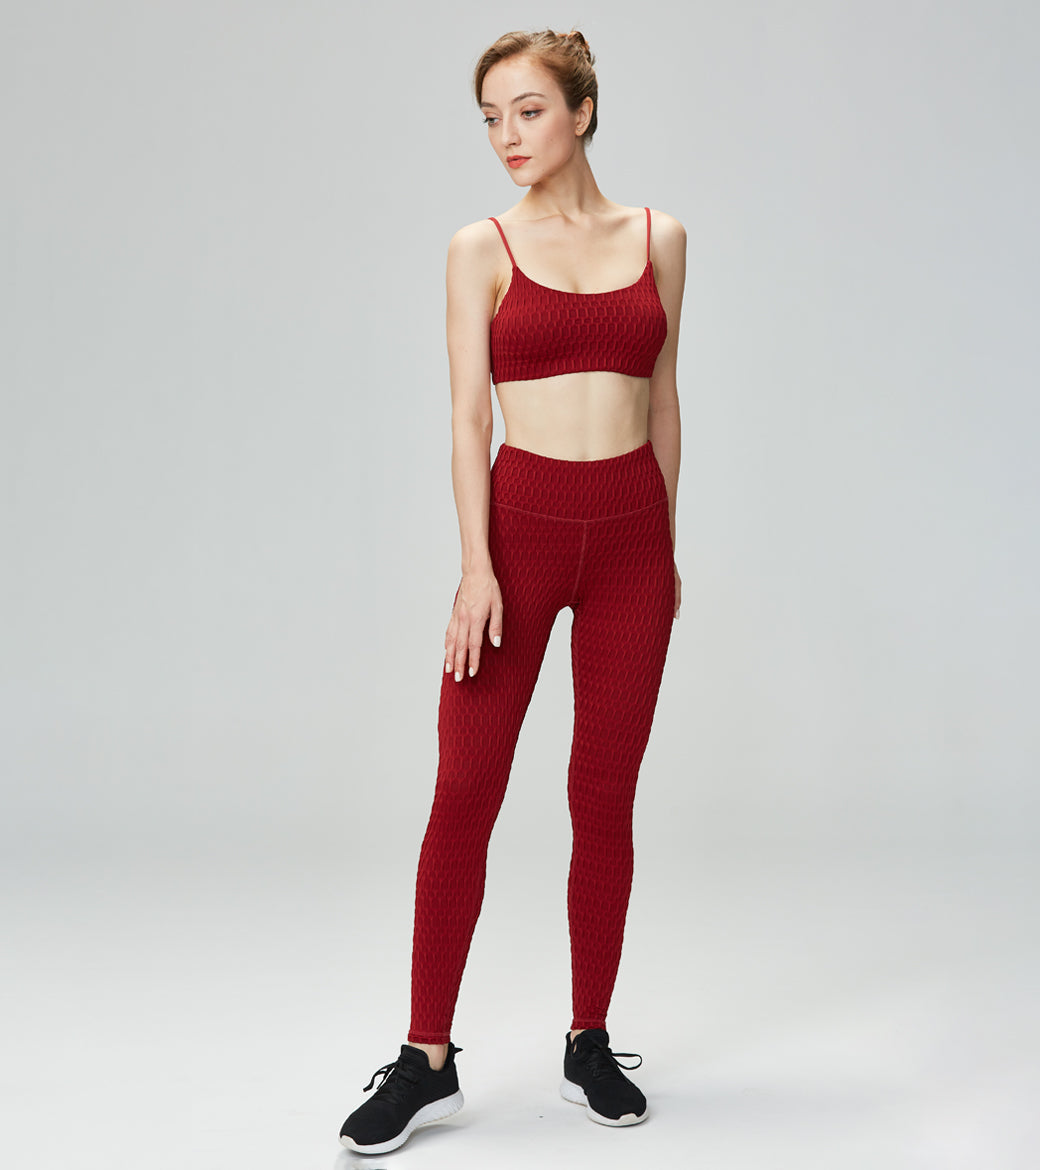 LOVESOFT Women's Red Jacquard Bubble Sport Yoga Sports Suit